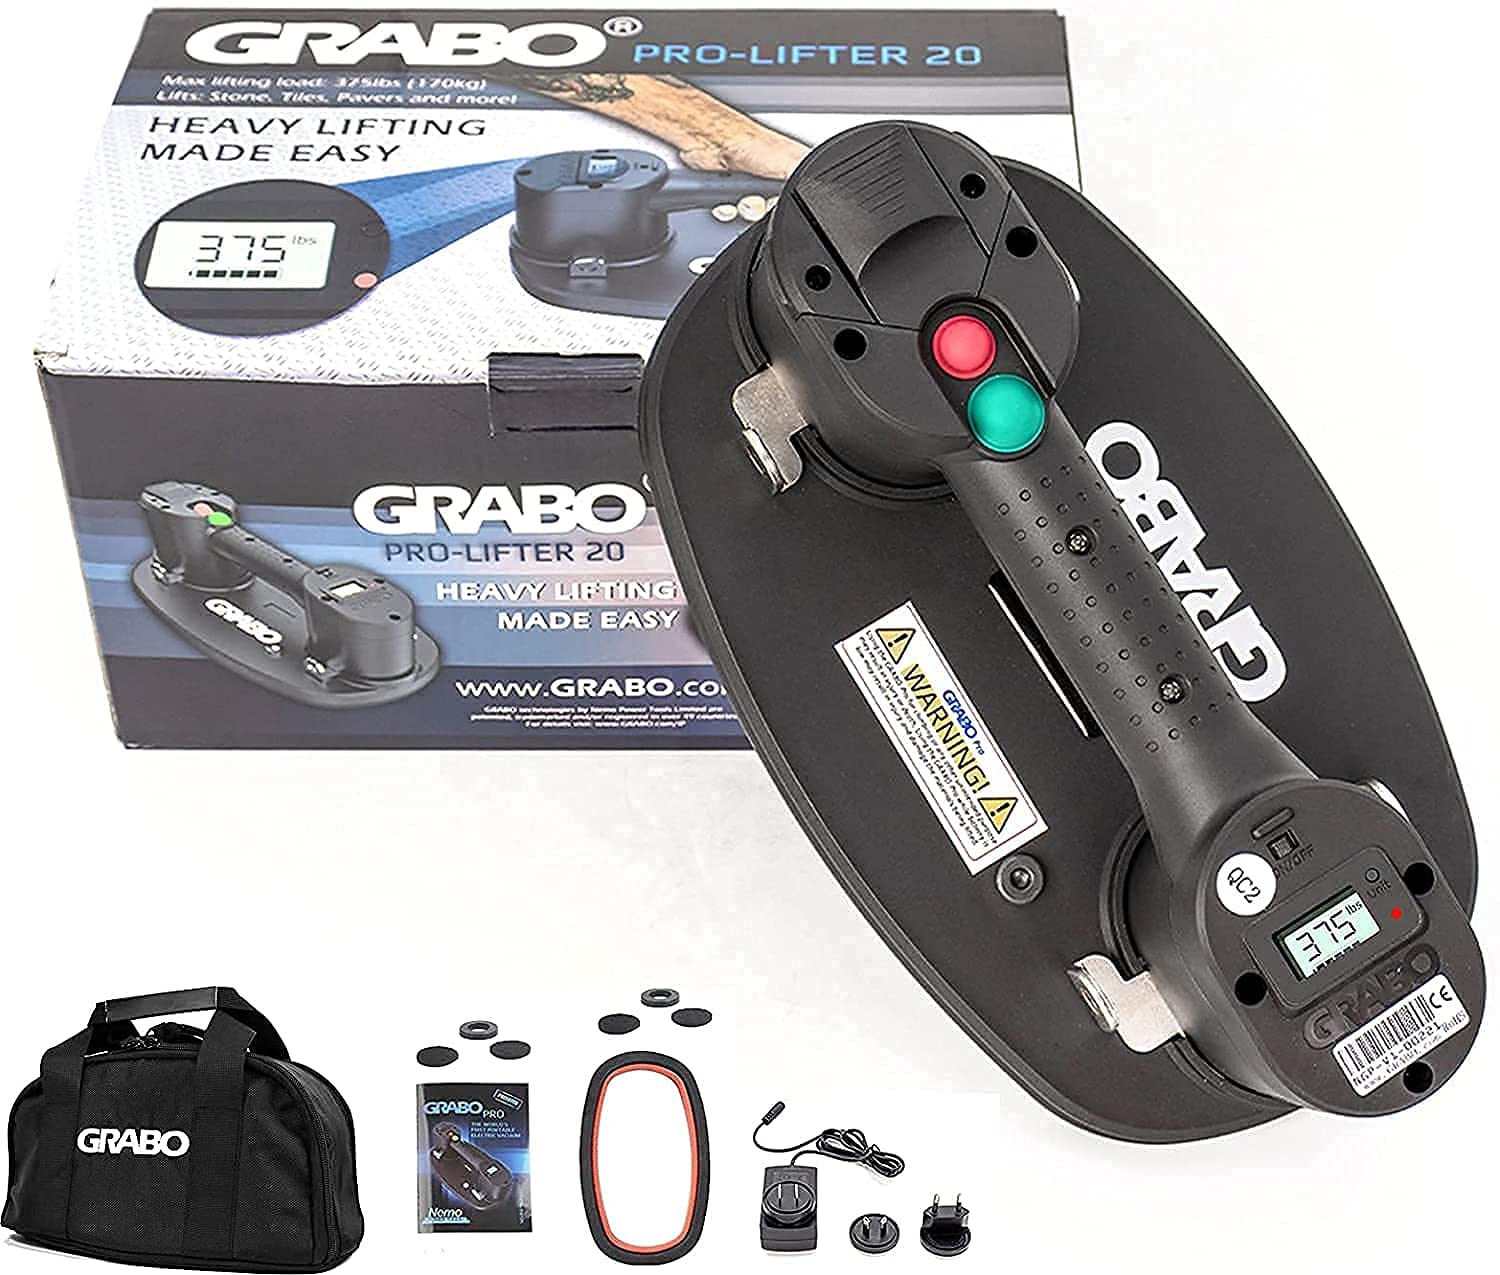  GRABO PRO-Lifter-20 电动真空吸盘 (2021) 适用于瓷砖、石材、木材、玻璃、混凝土摊铺机、干墙。带自动关闭开关，可提升 375 磅的重量。包括：1 个电池、1...